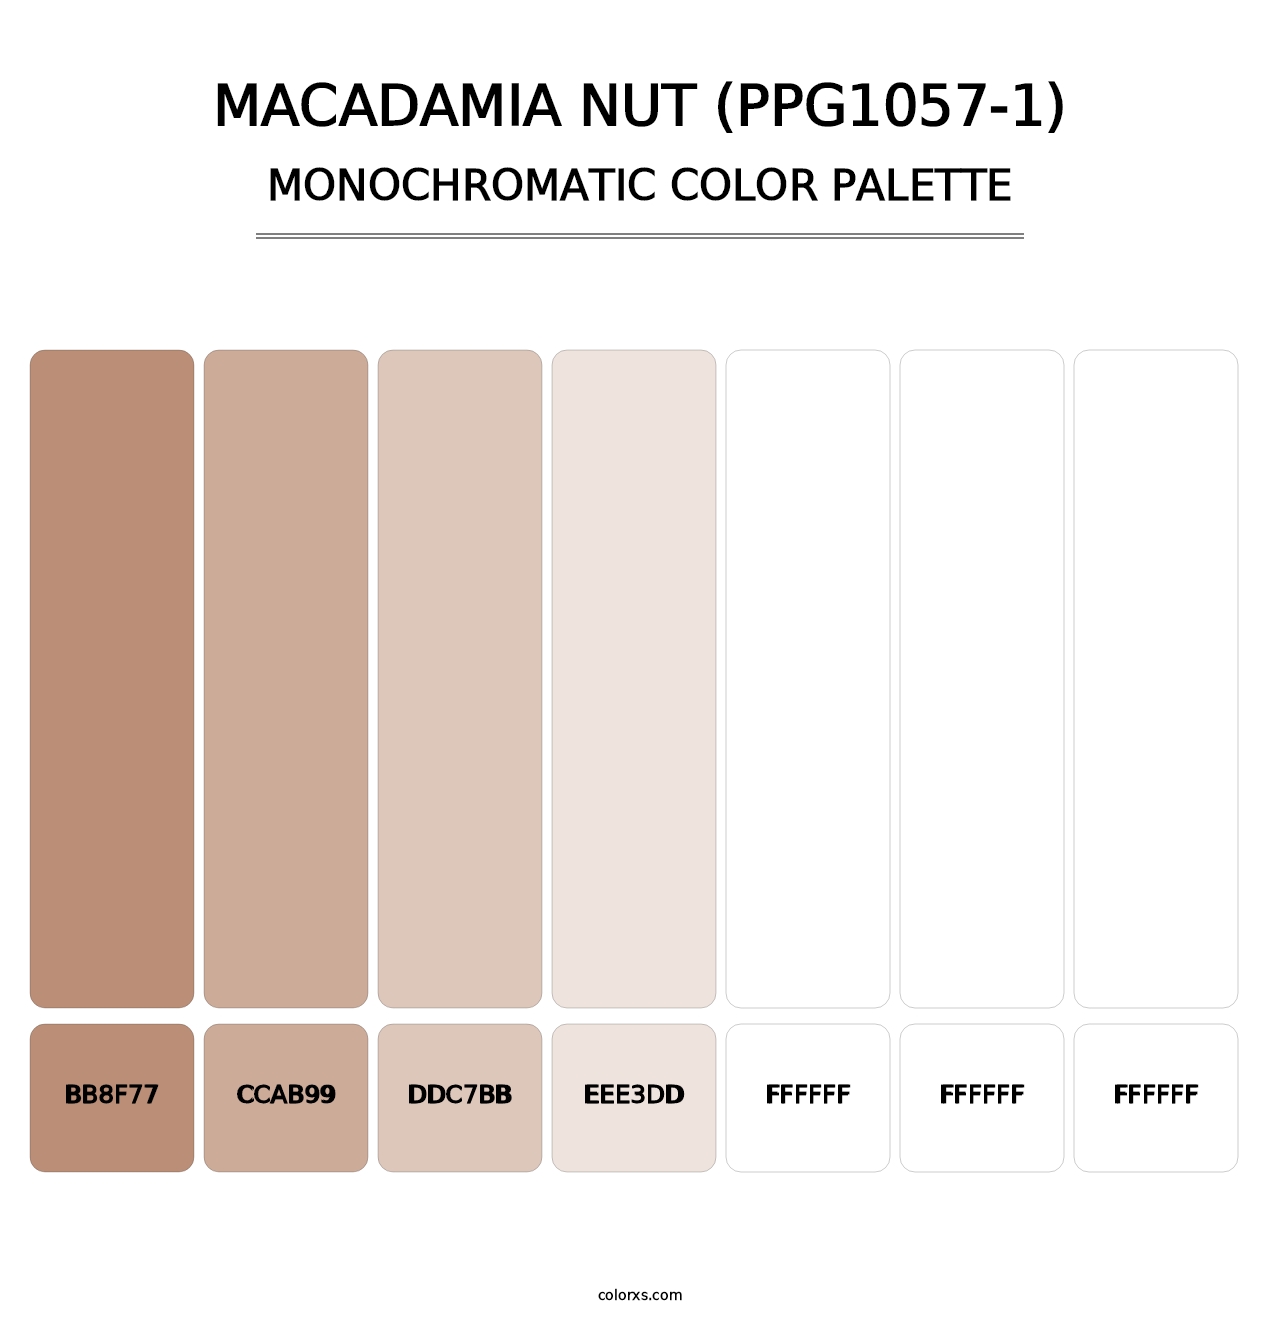 Macadamia Nut (PPG1057-1) - Monochromatic Color Palette